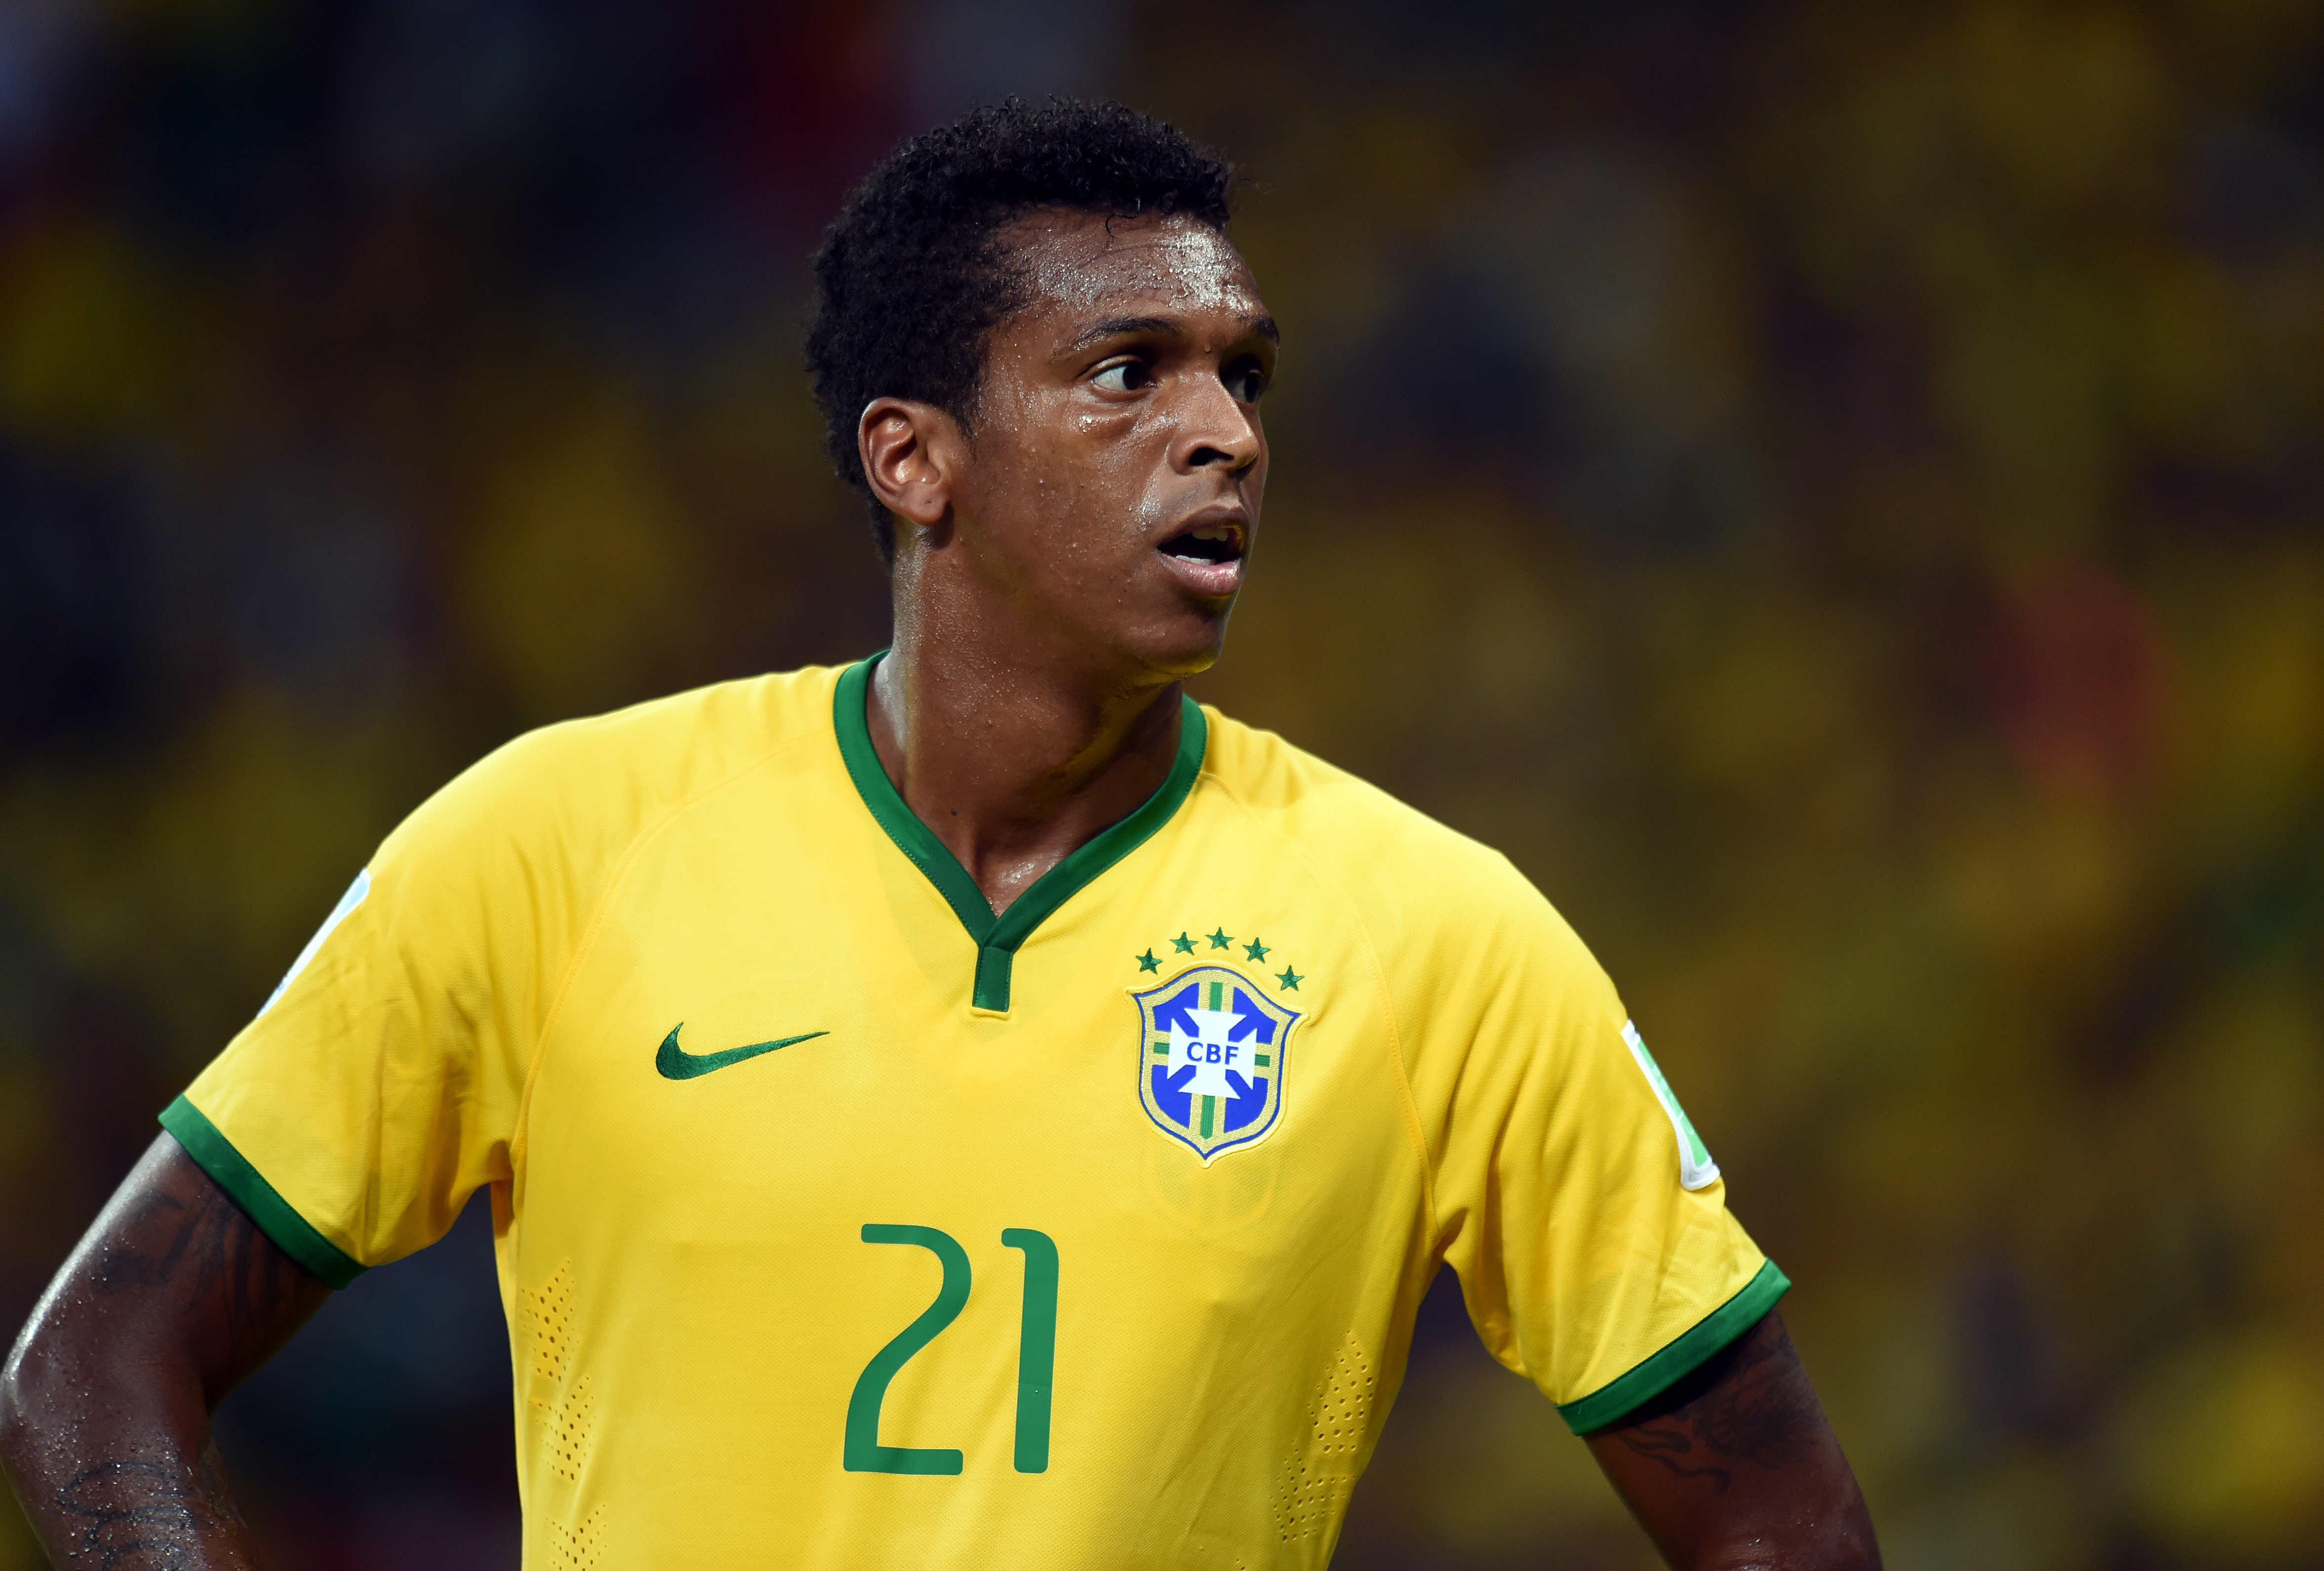 Brazilian footballer Jo at the 2014 World Cup